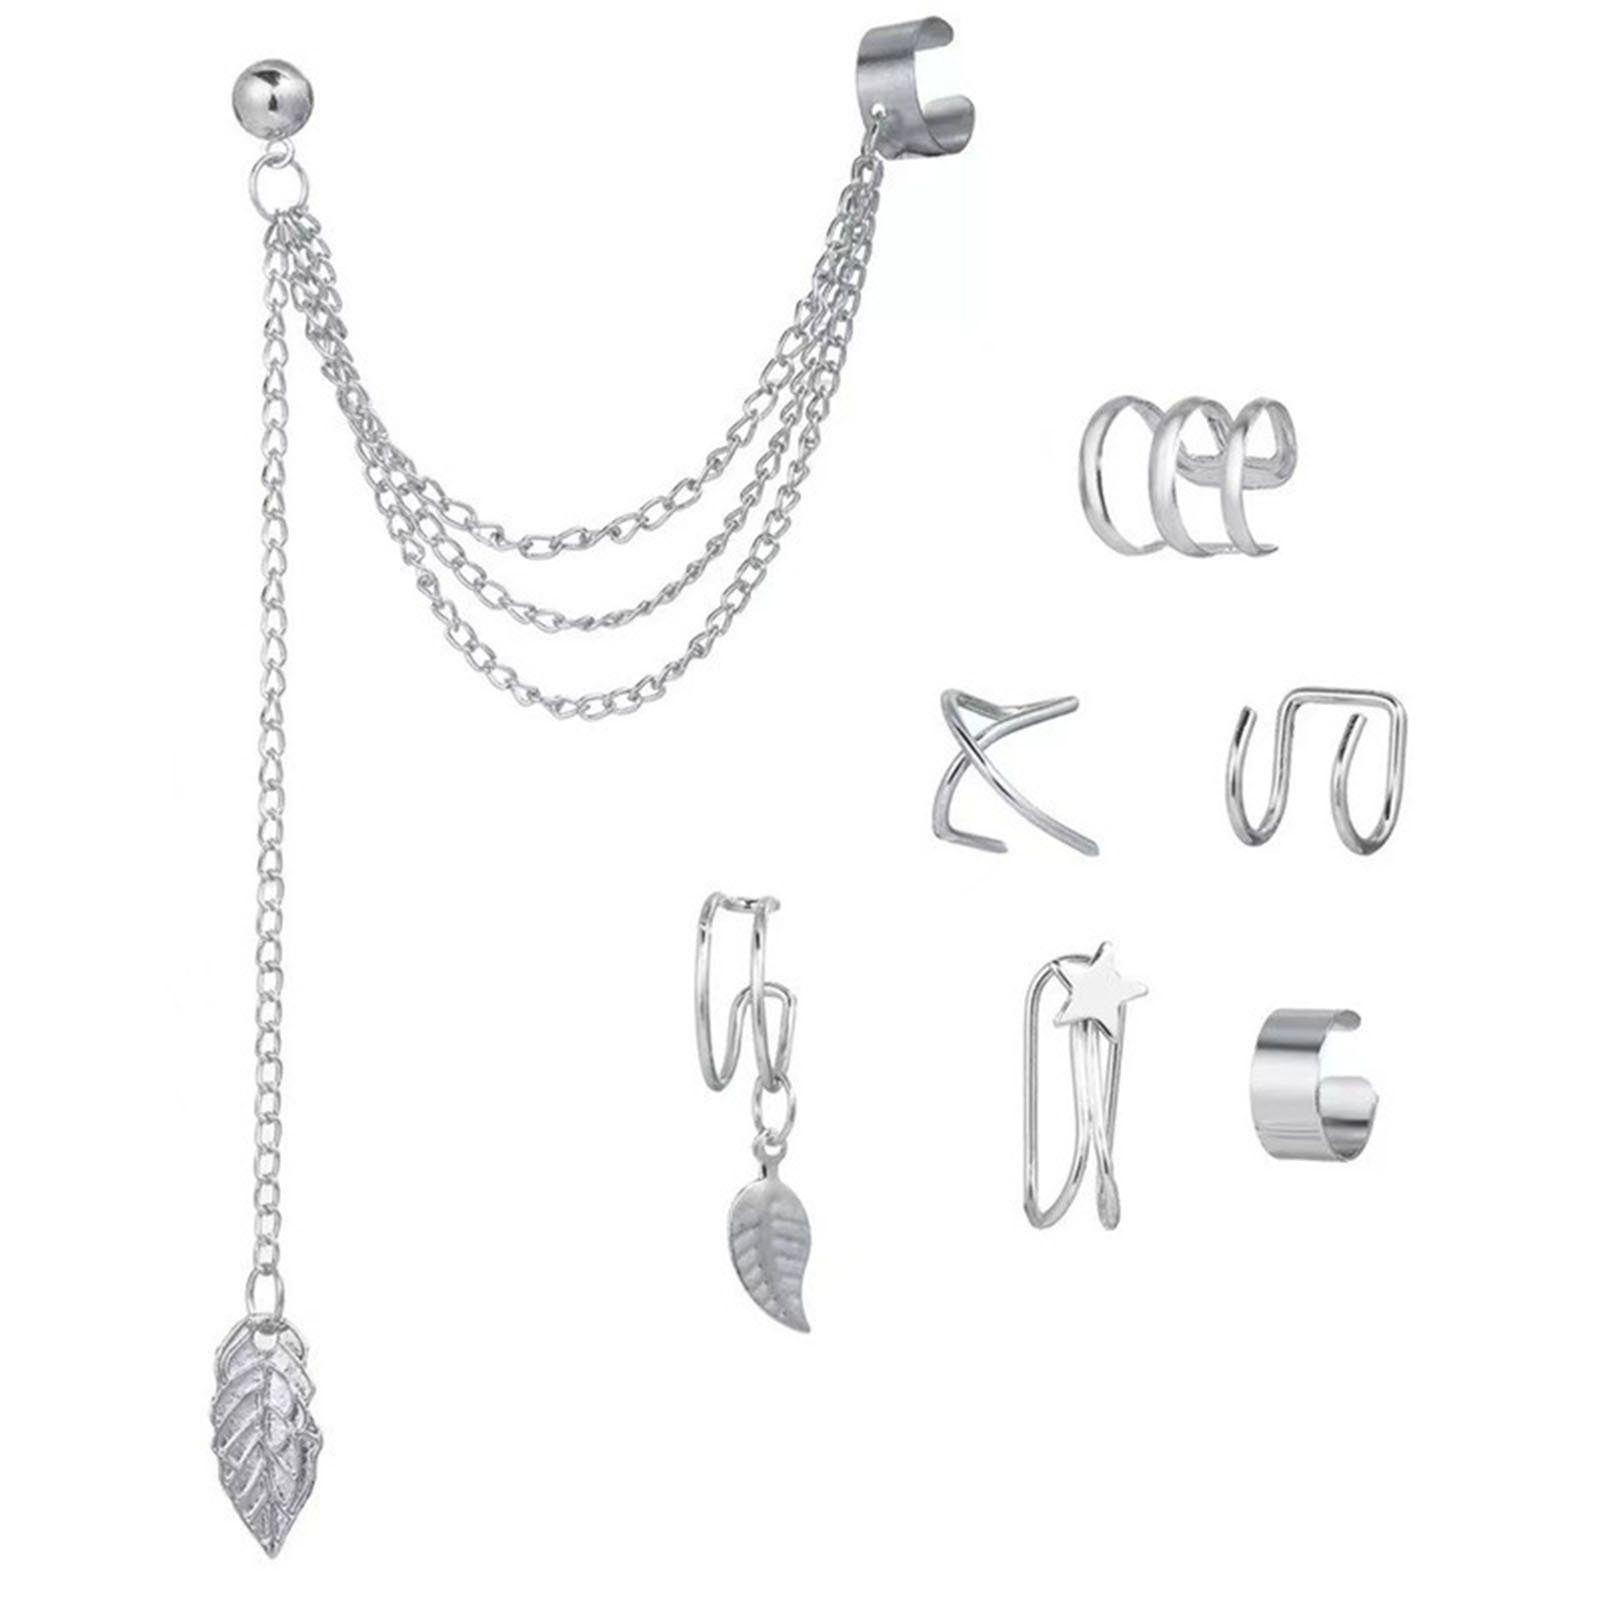 Ohrclip-Set silver Blusmart Personalisierbar, Modischer Nicht Exquisiter, Metall-Ohrclip, 7